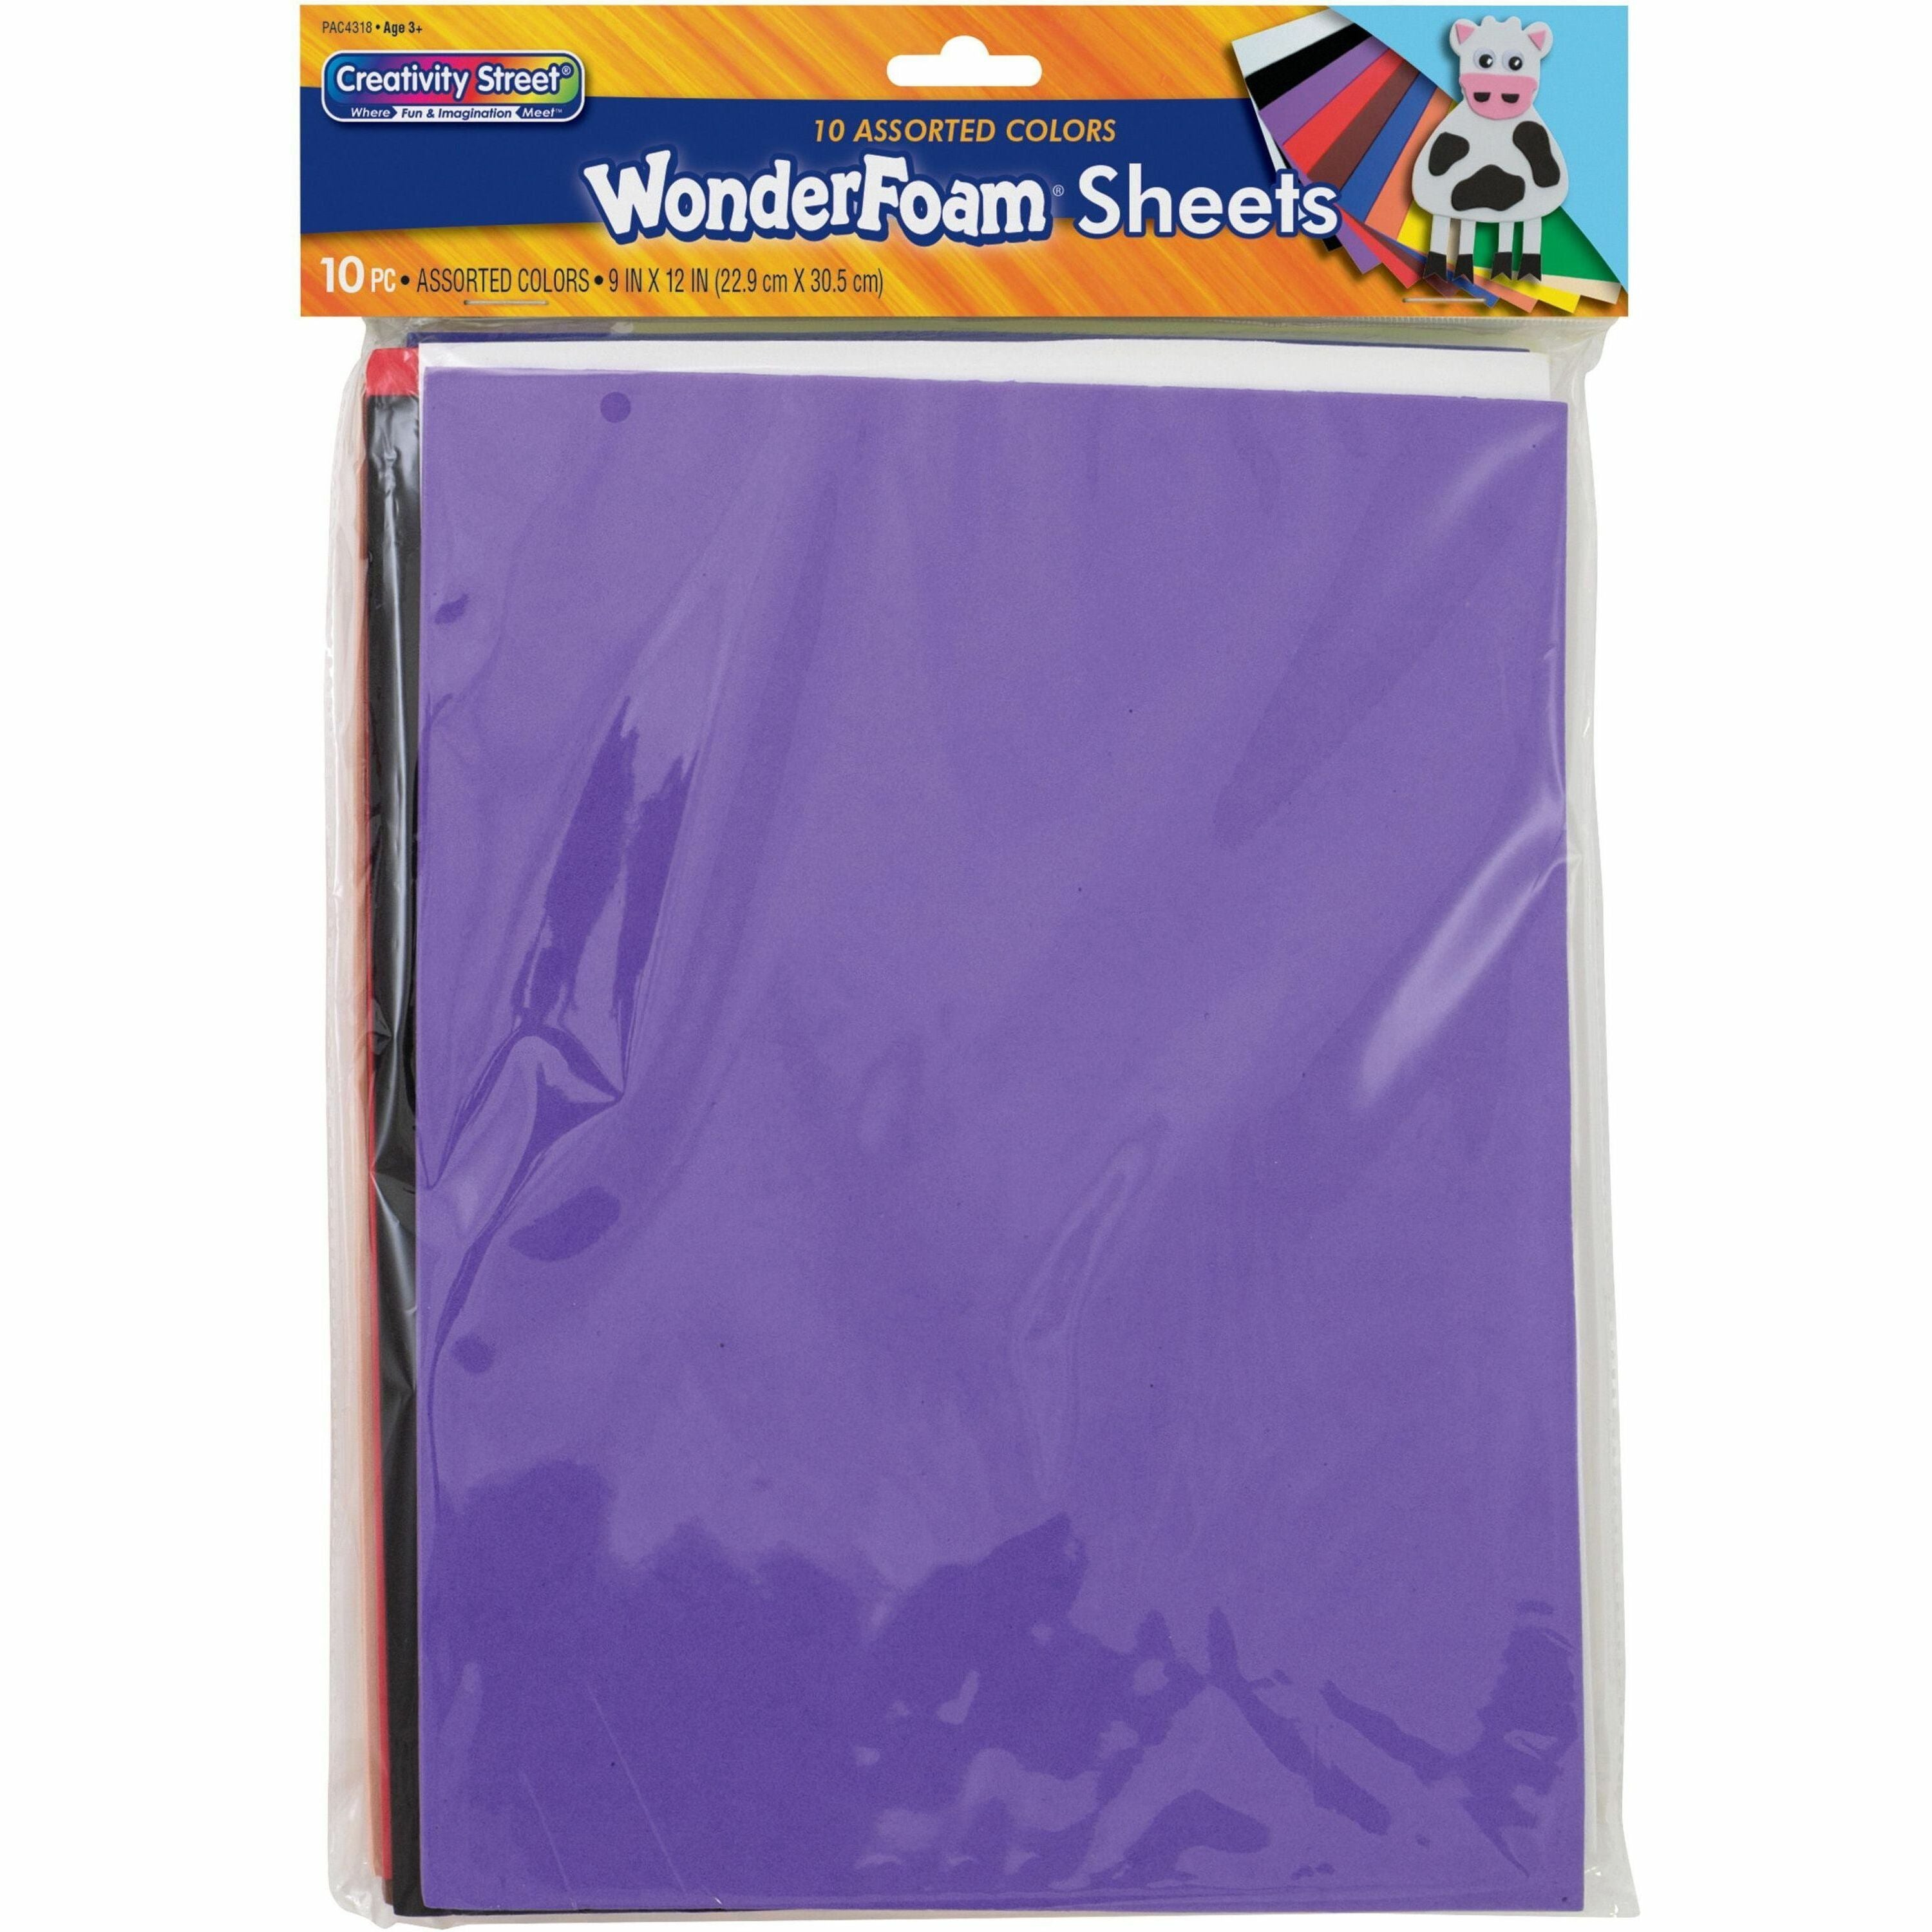 Creativity Street Wonderfoam Sheets - Craft - 12"Height x 9"Width - 1 / Pack - Assorted - Foam - 1